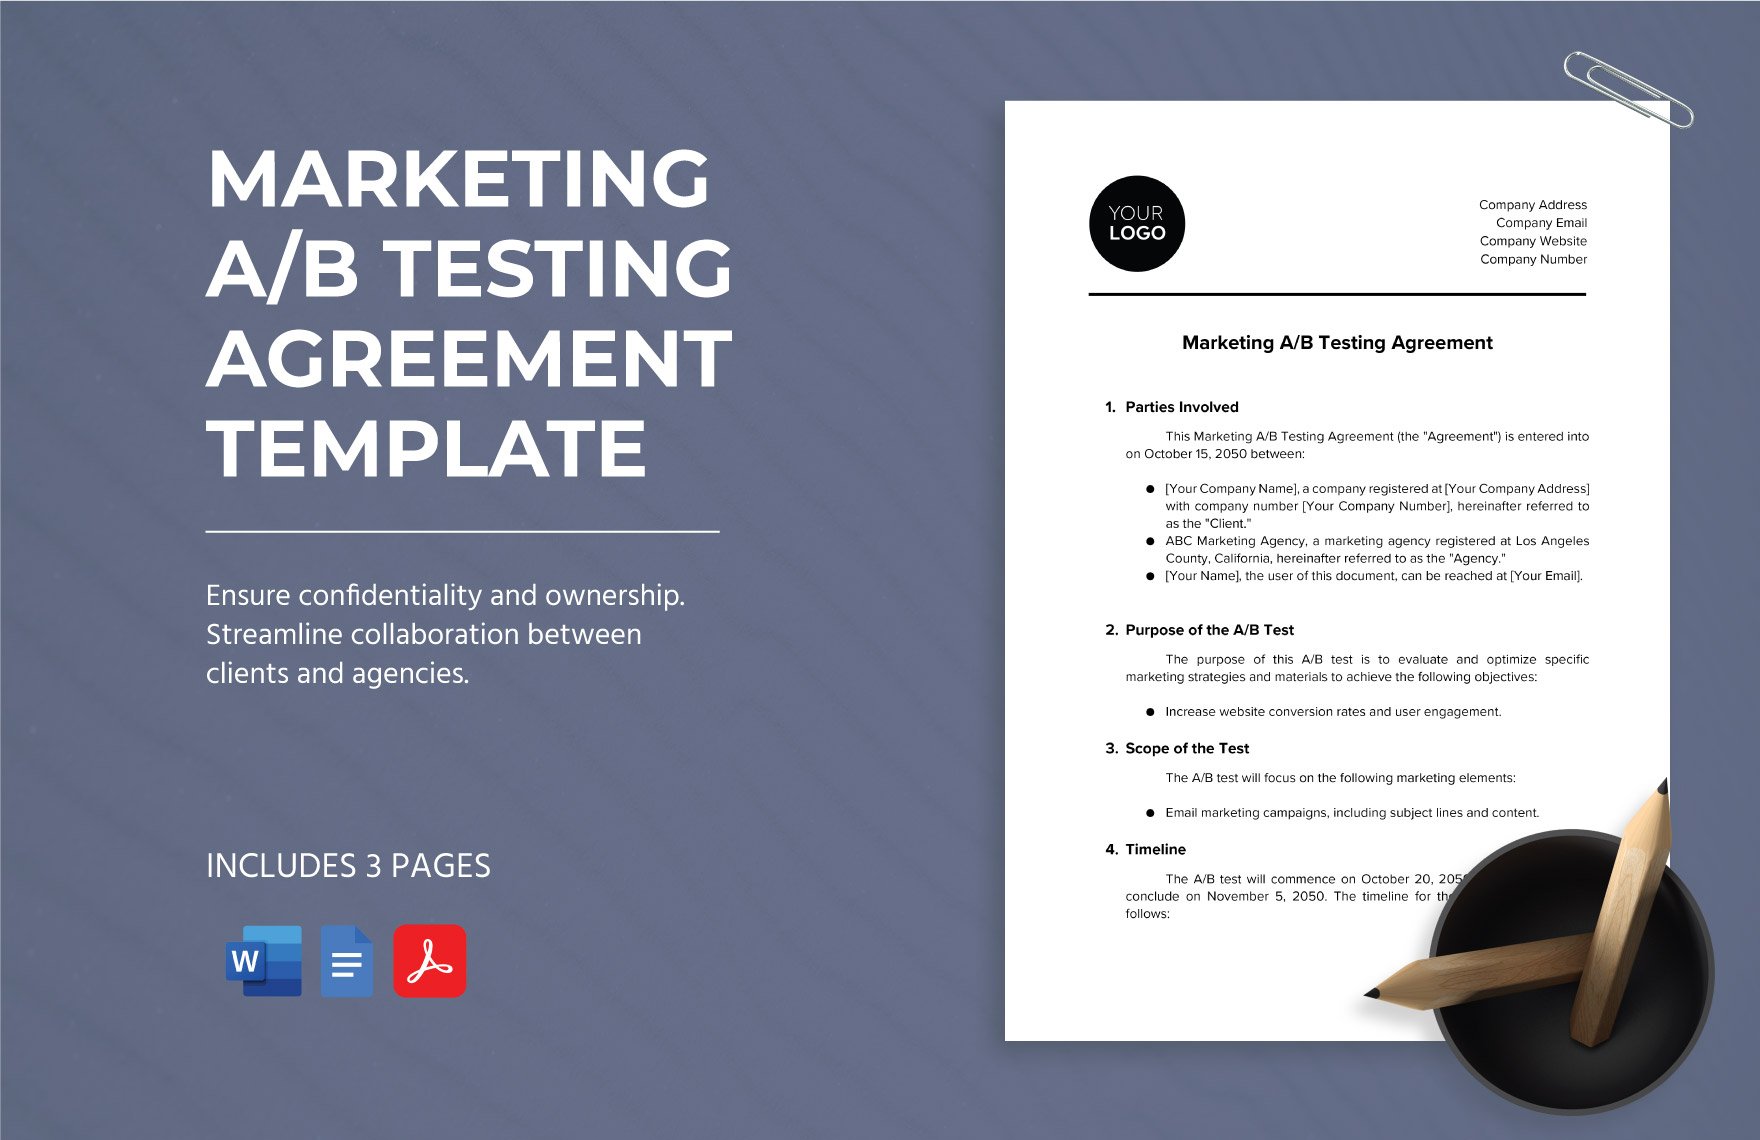 Marketing A/B Testing Agreement Template in Word, Google Docs, PDF